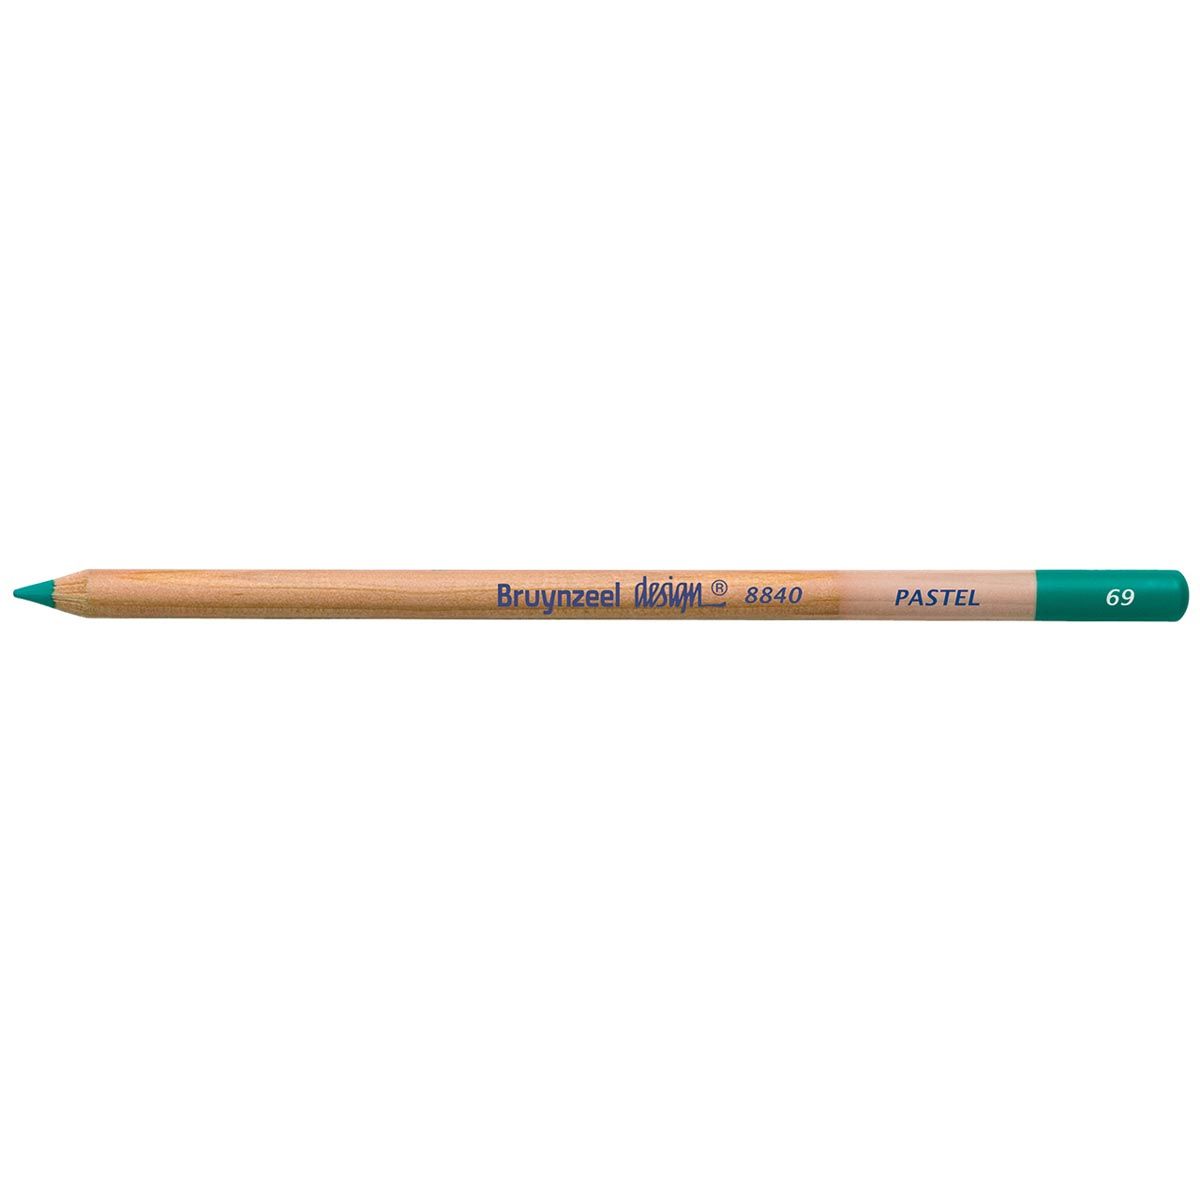 Bruynzeel Design Pastel Pencil - Leaf Green 69